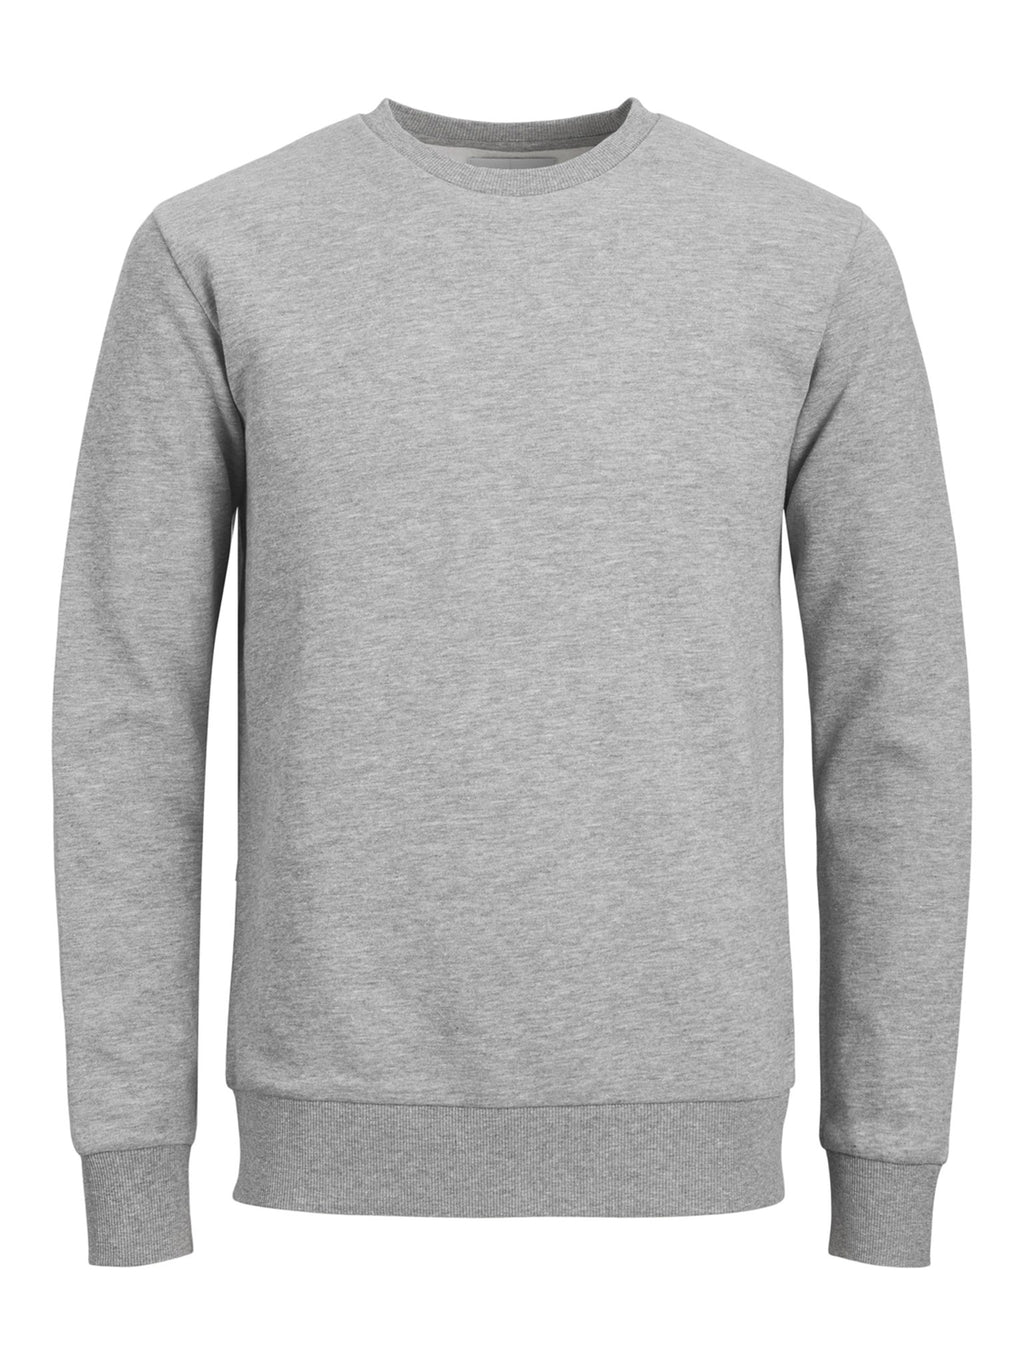 Basic Sweatsuit w. Crewneck (Light Grey Melange) - Package Deal